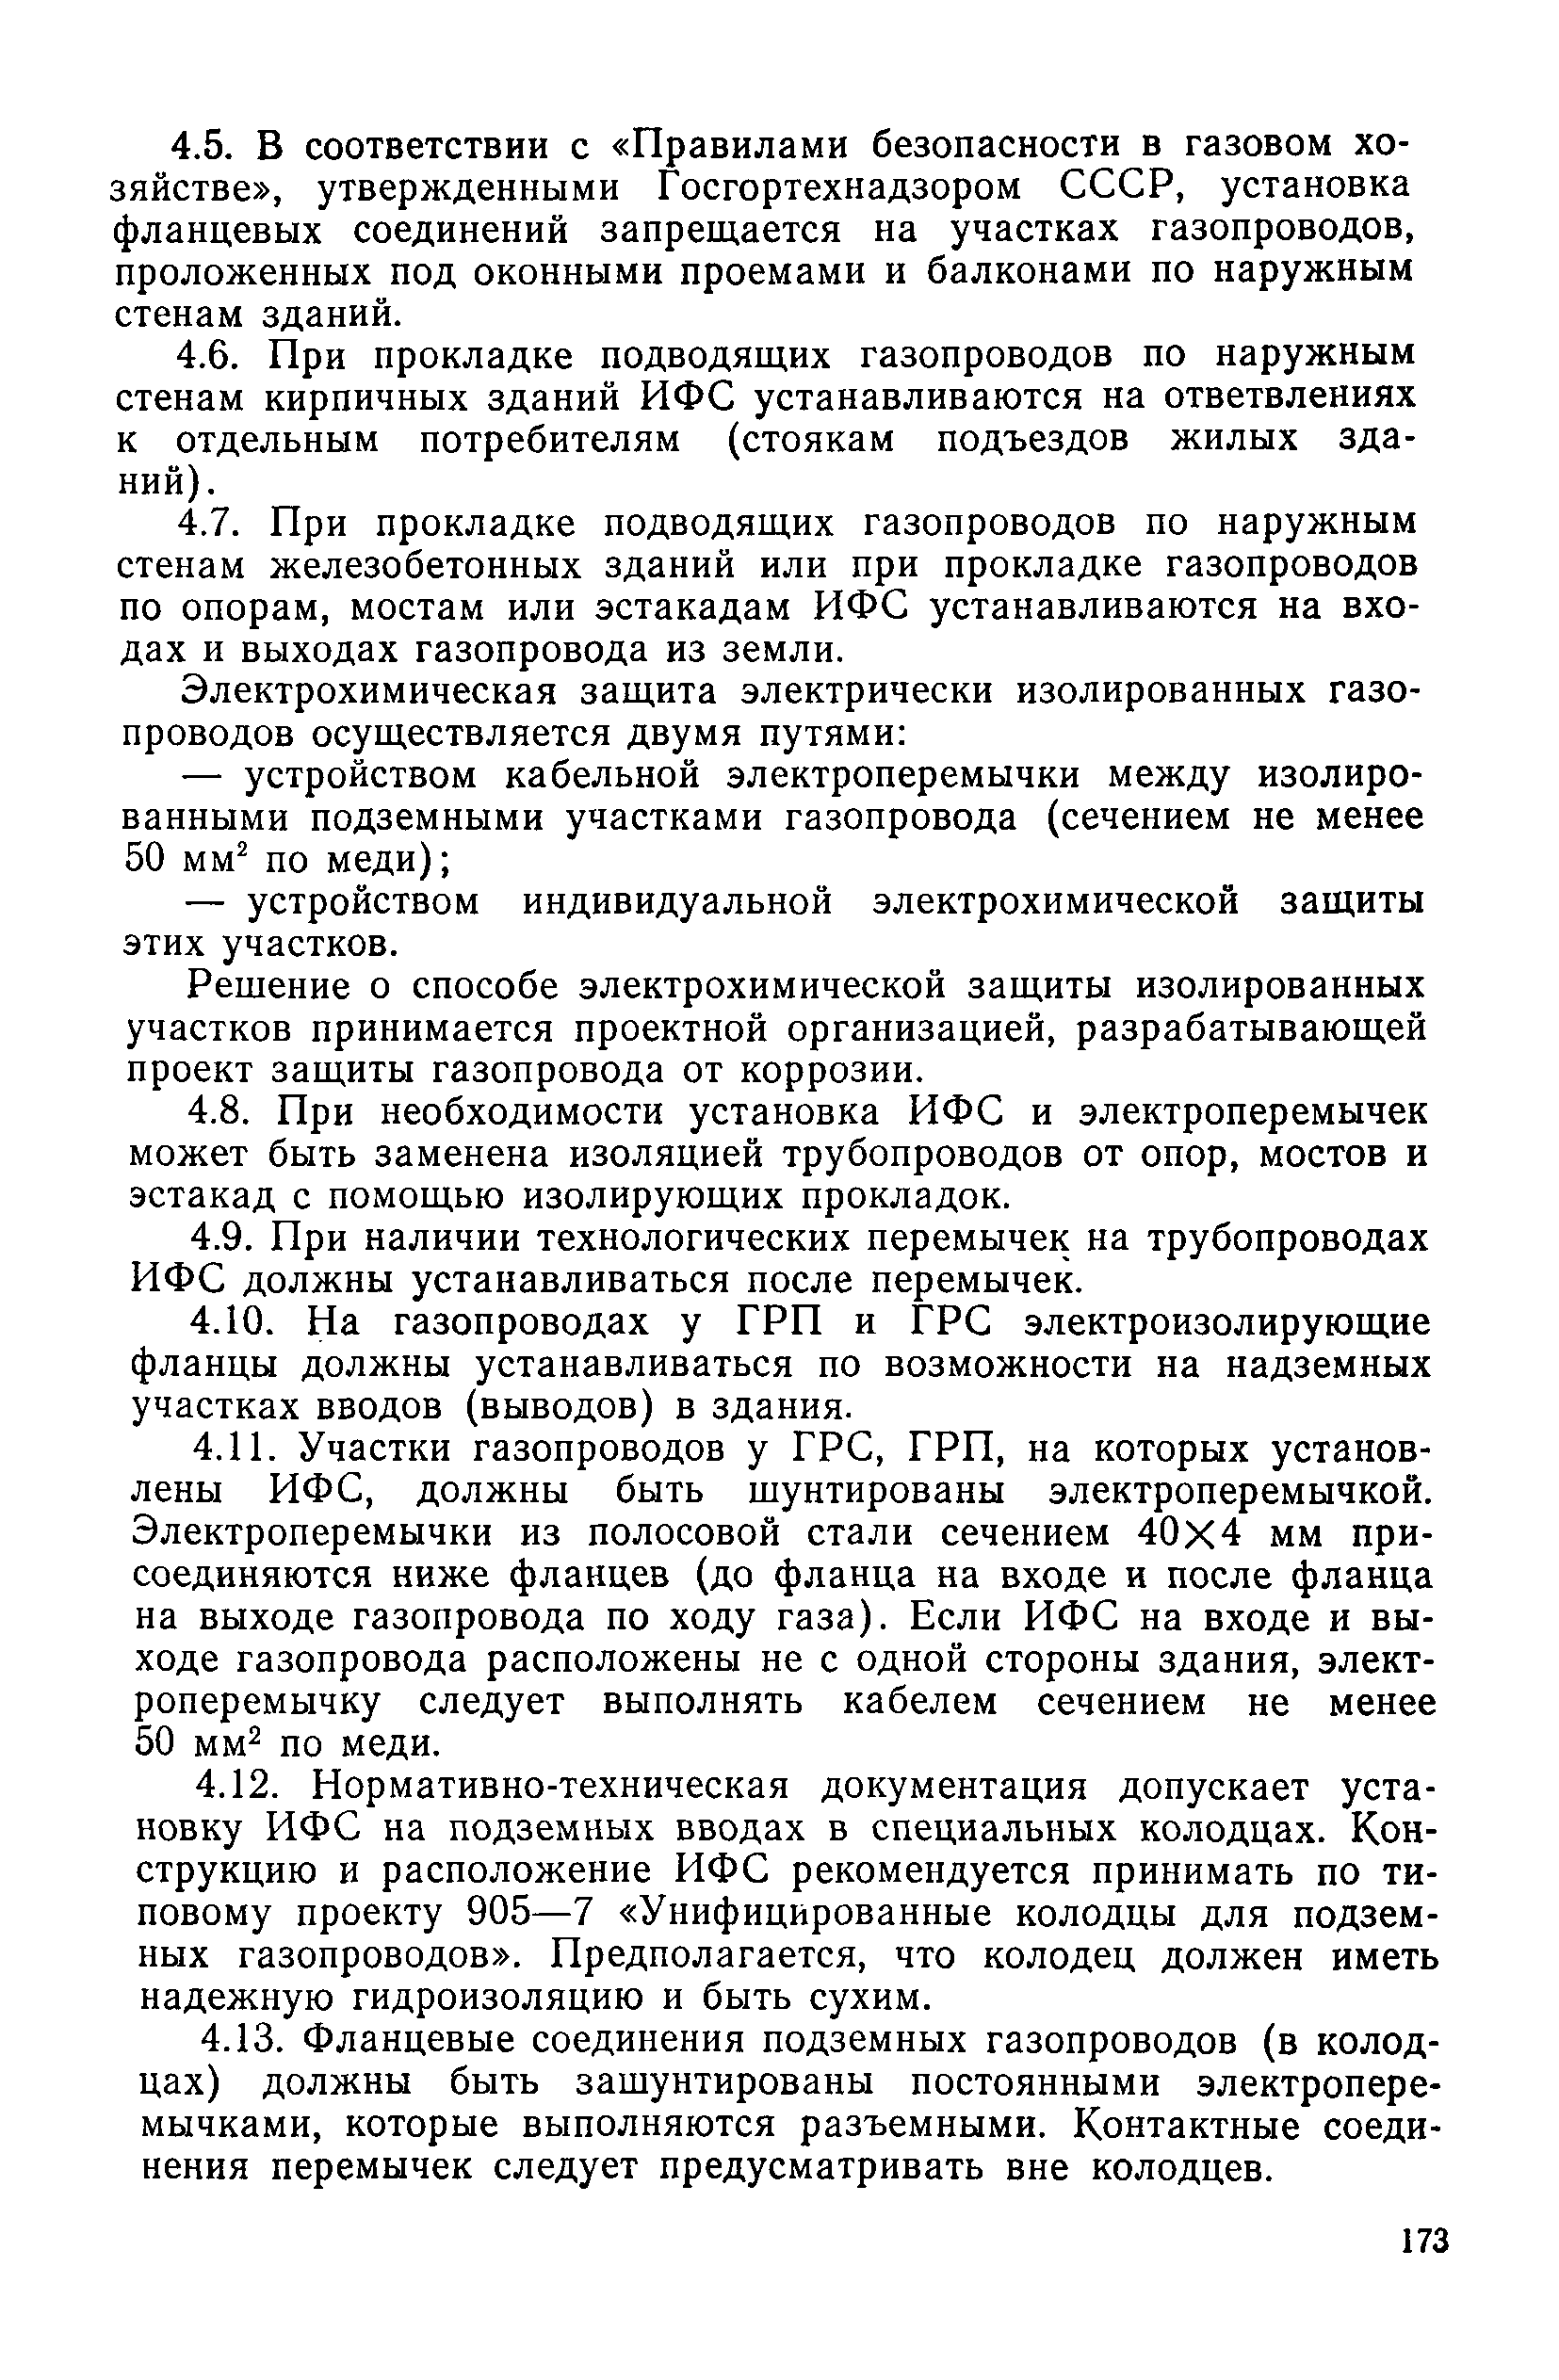 РДМУ 204 РСФСР 3.1-81